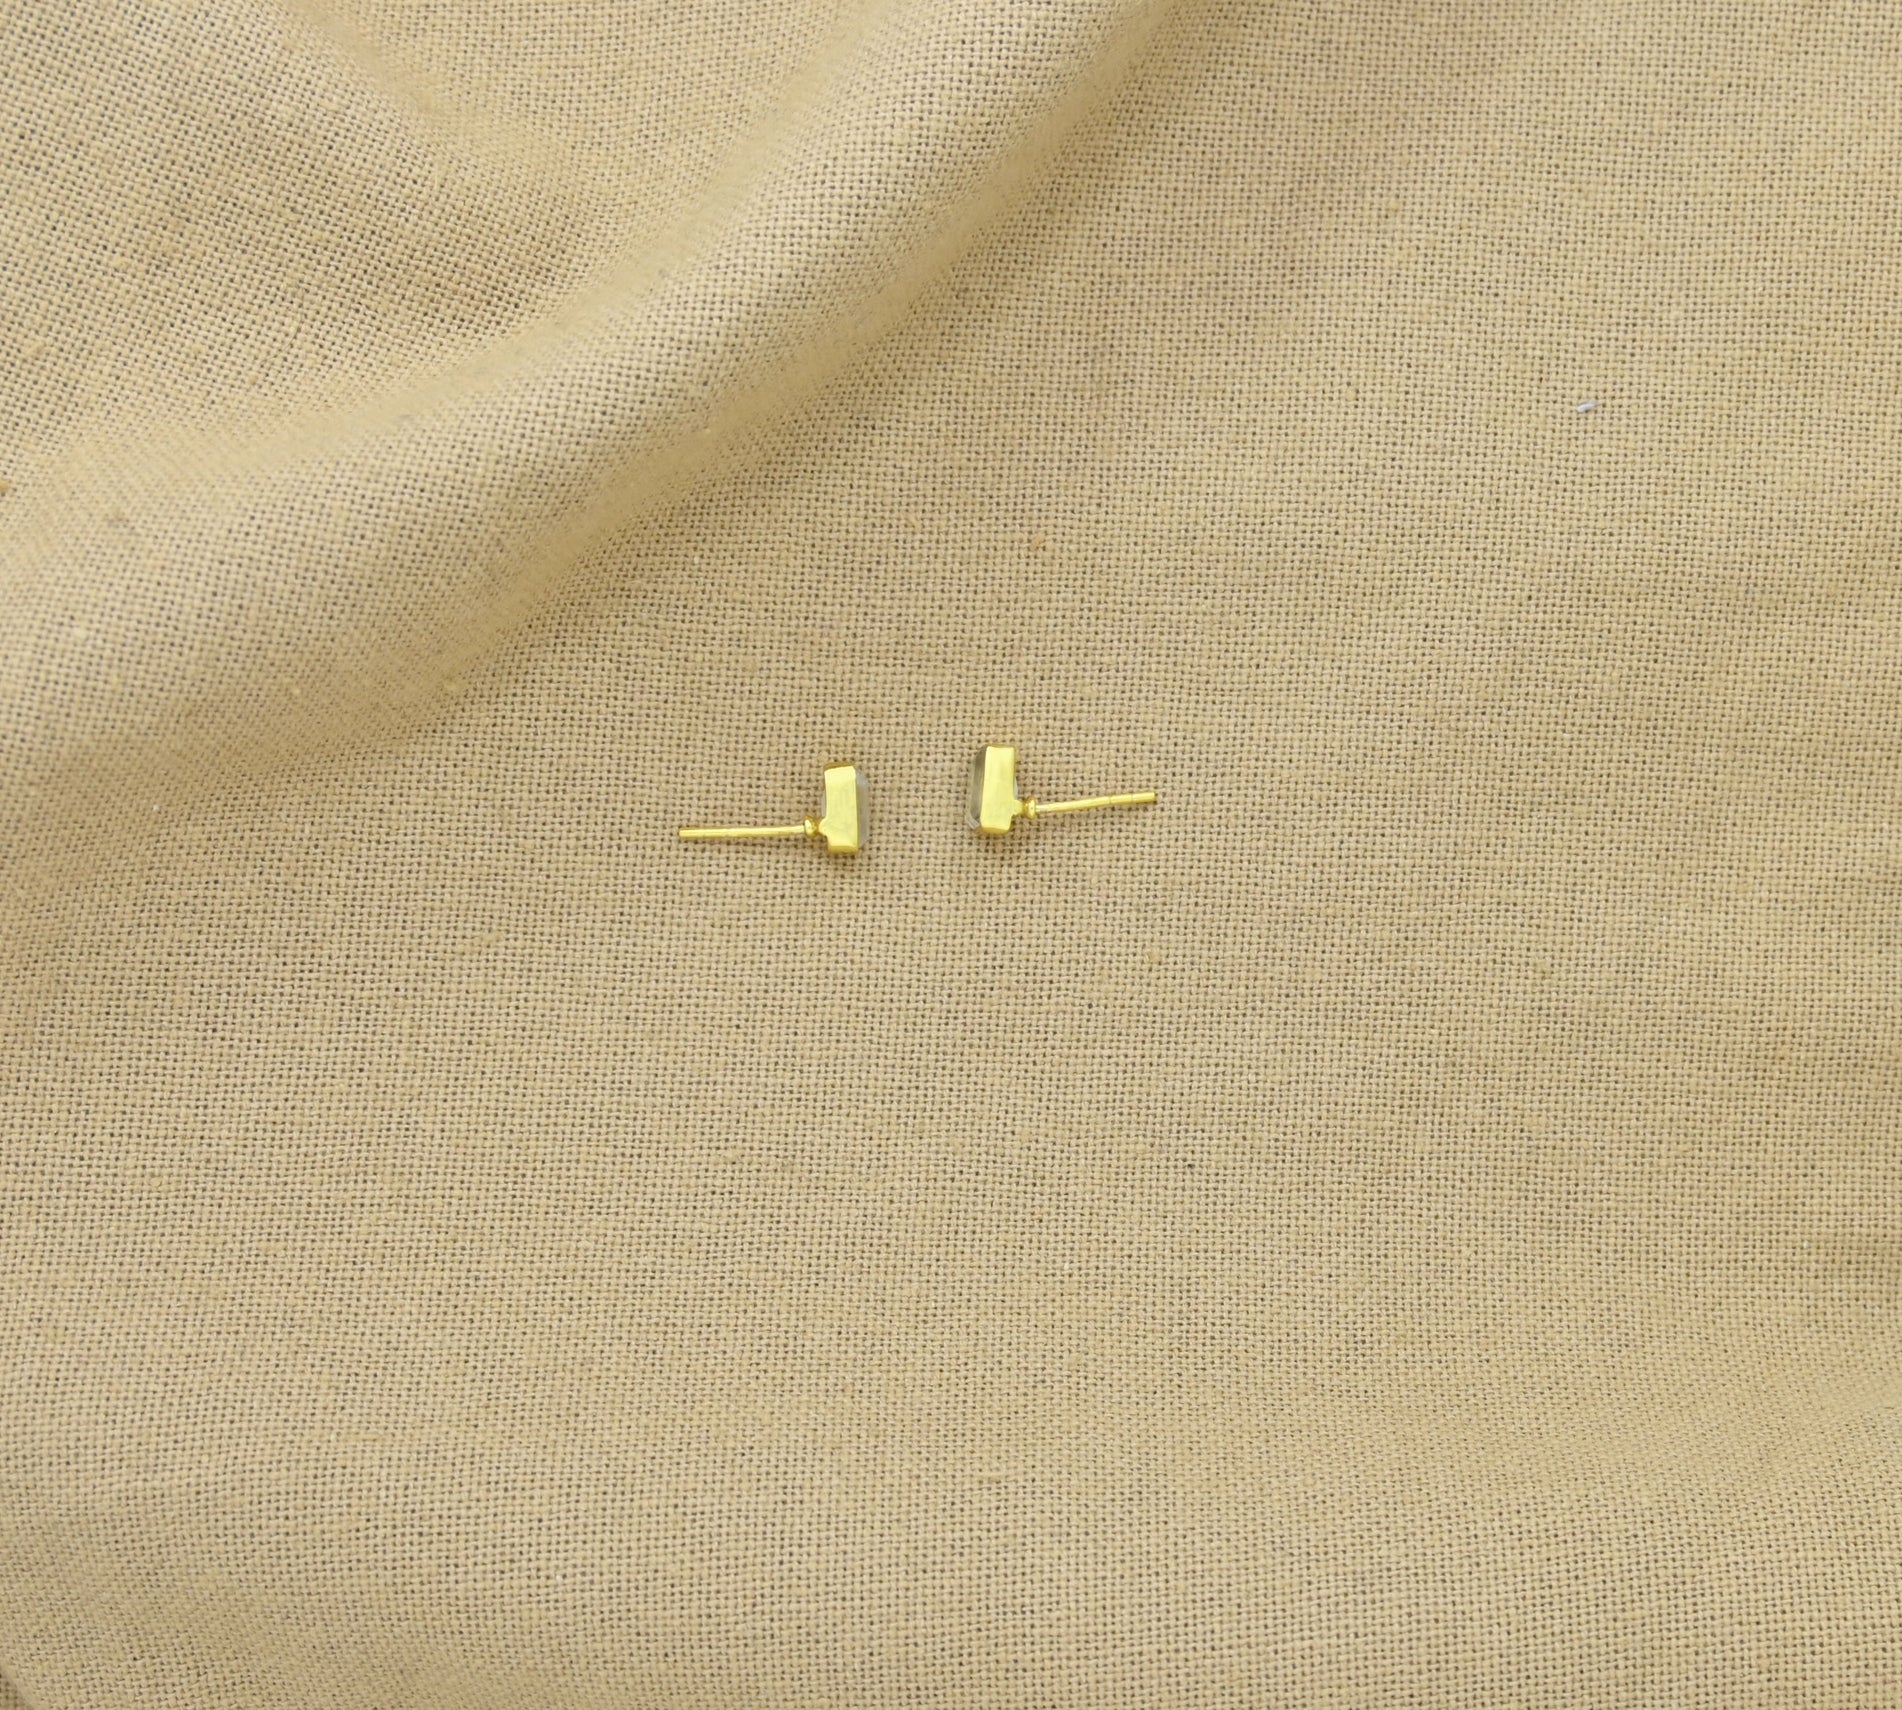 Baguette Cut Moonstone Gold Plated Stud Earrings